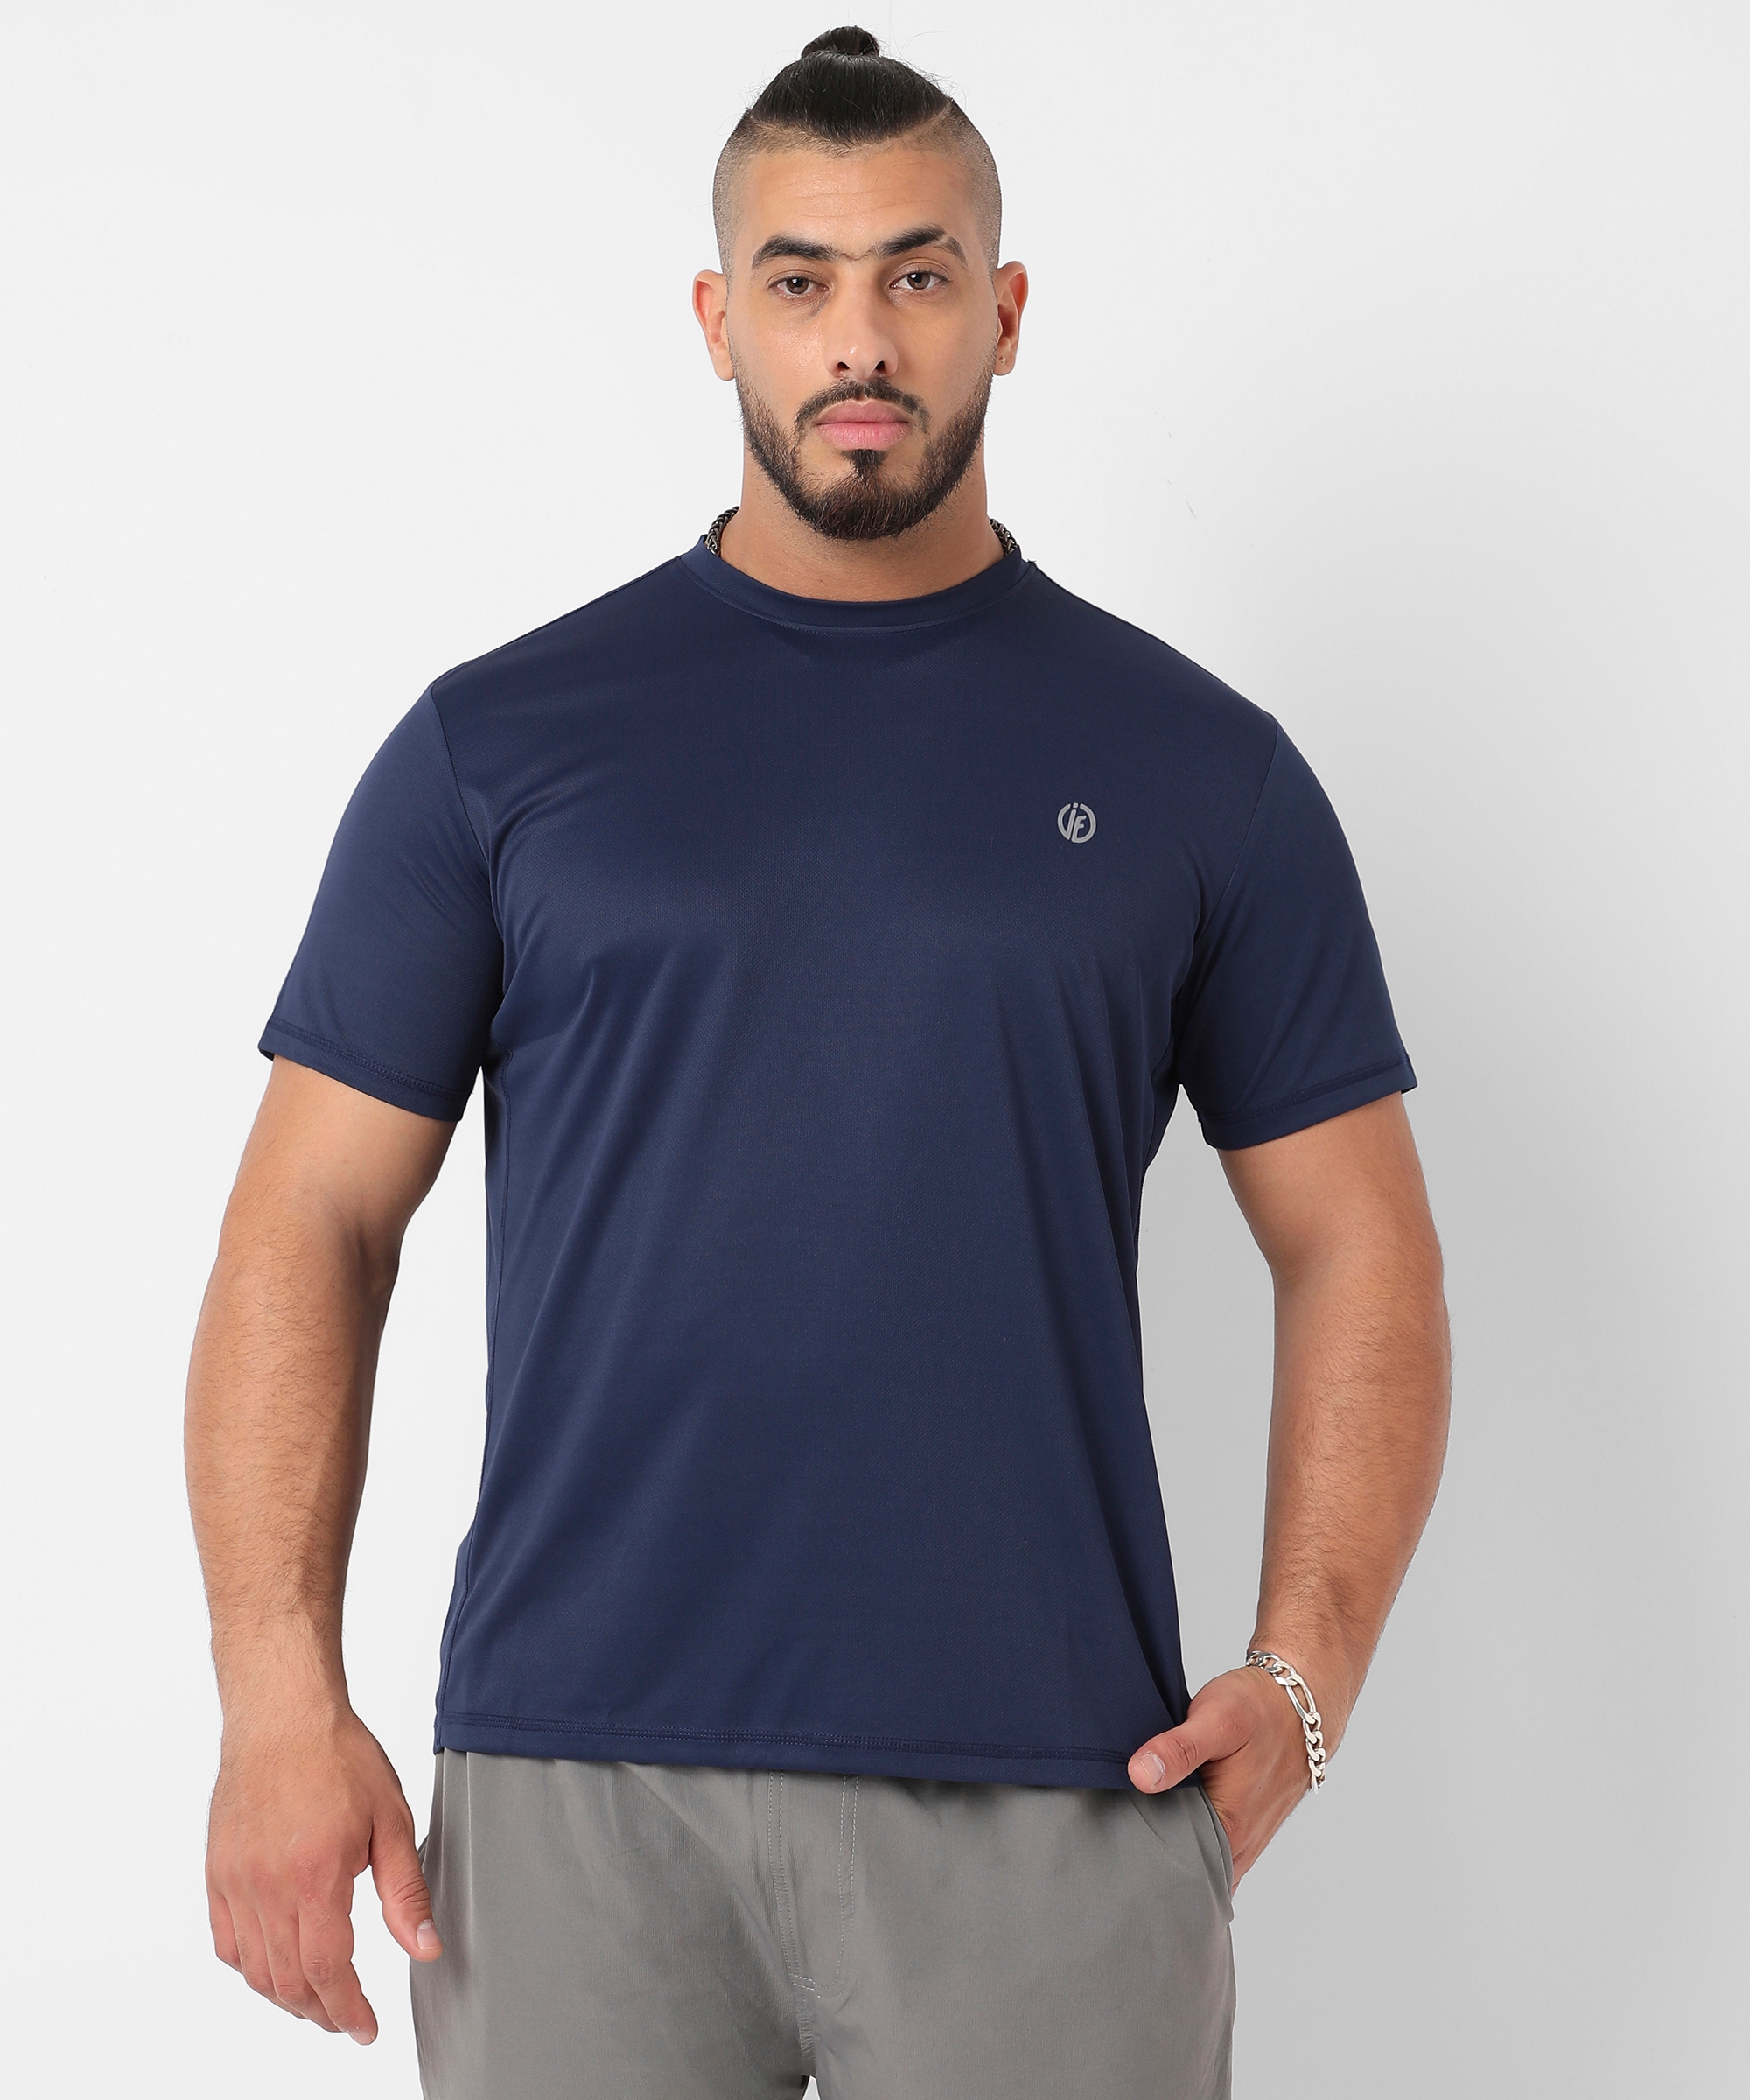 Men's Navy Blue Basic Activewear T-Shirt